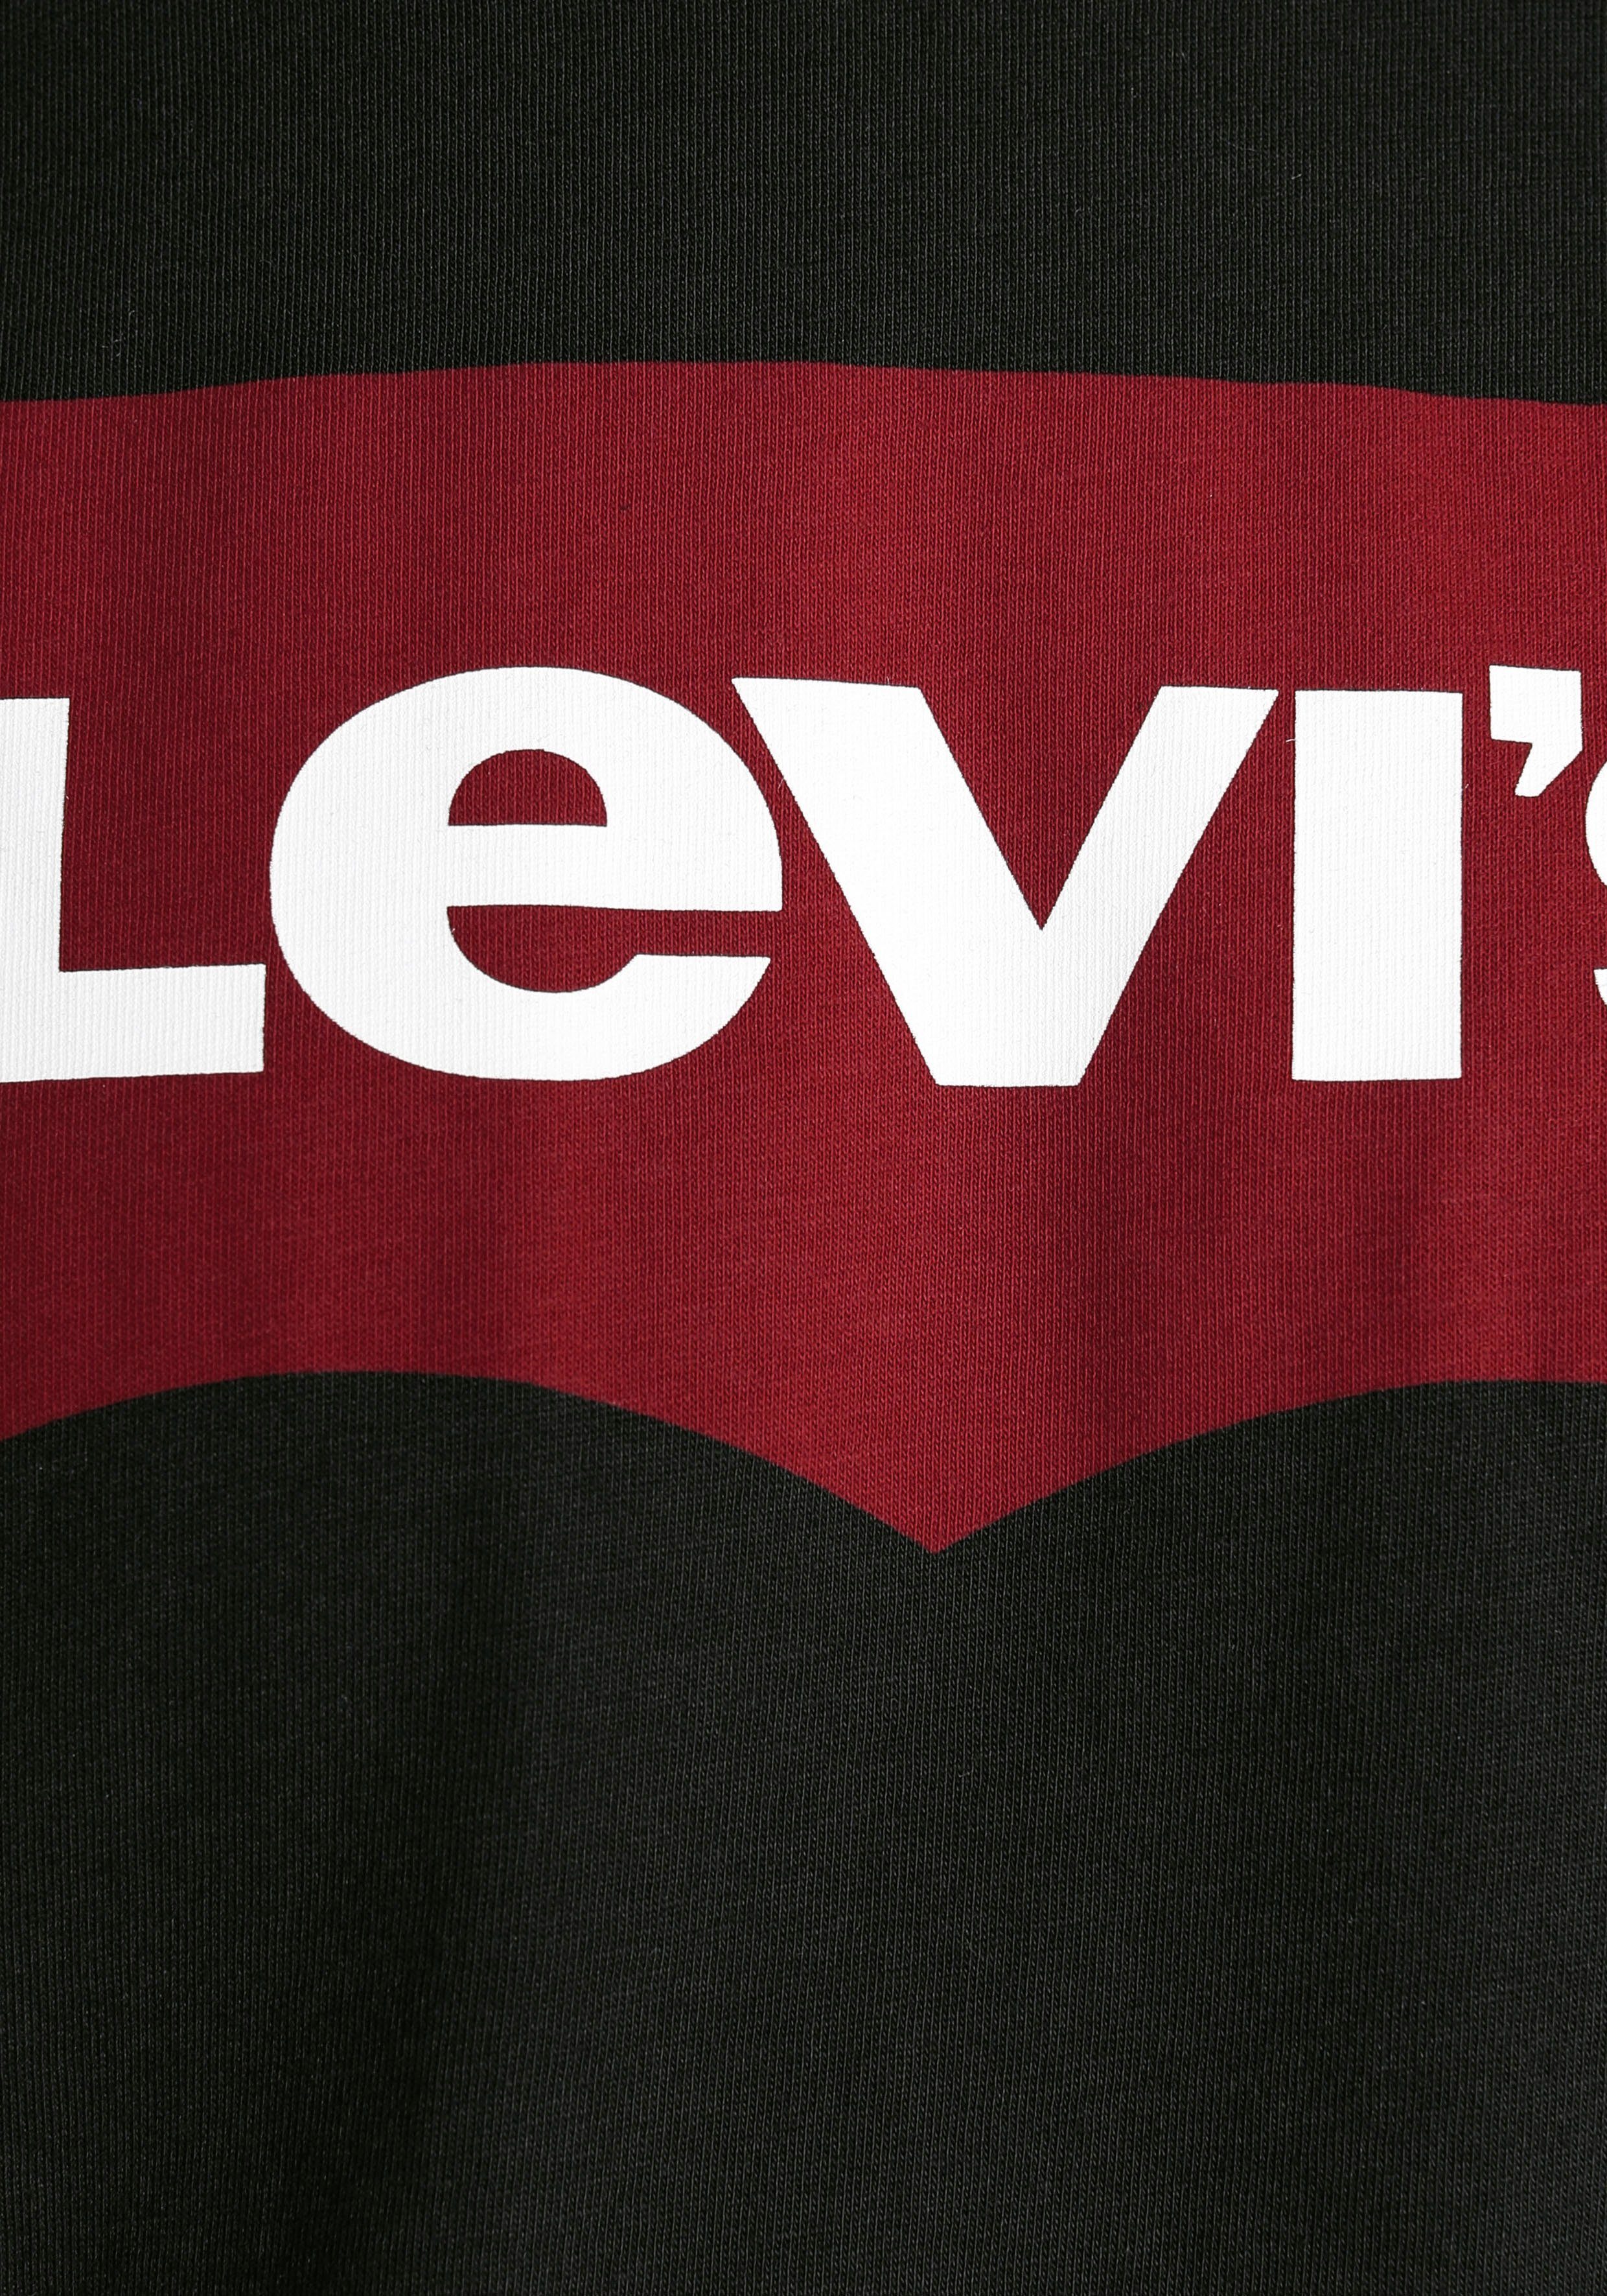 T-Shirt Batwing Levi's® Tee schwarz Logo mit Logo-Front-Print